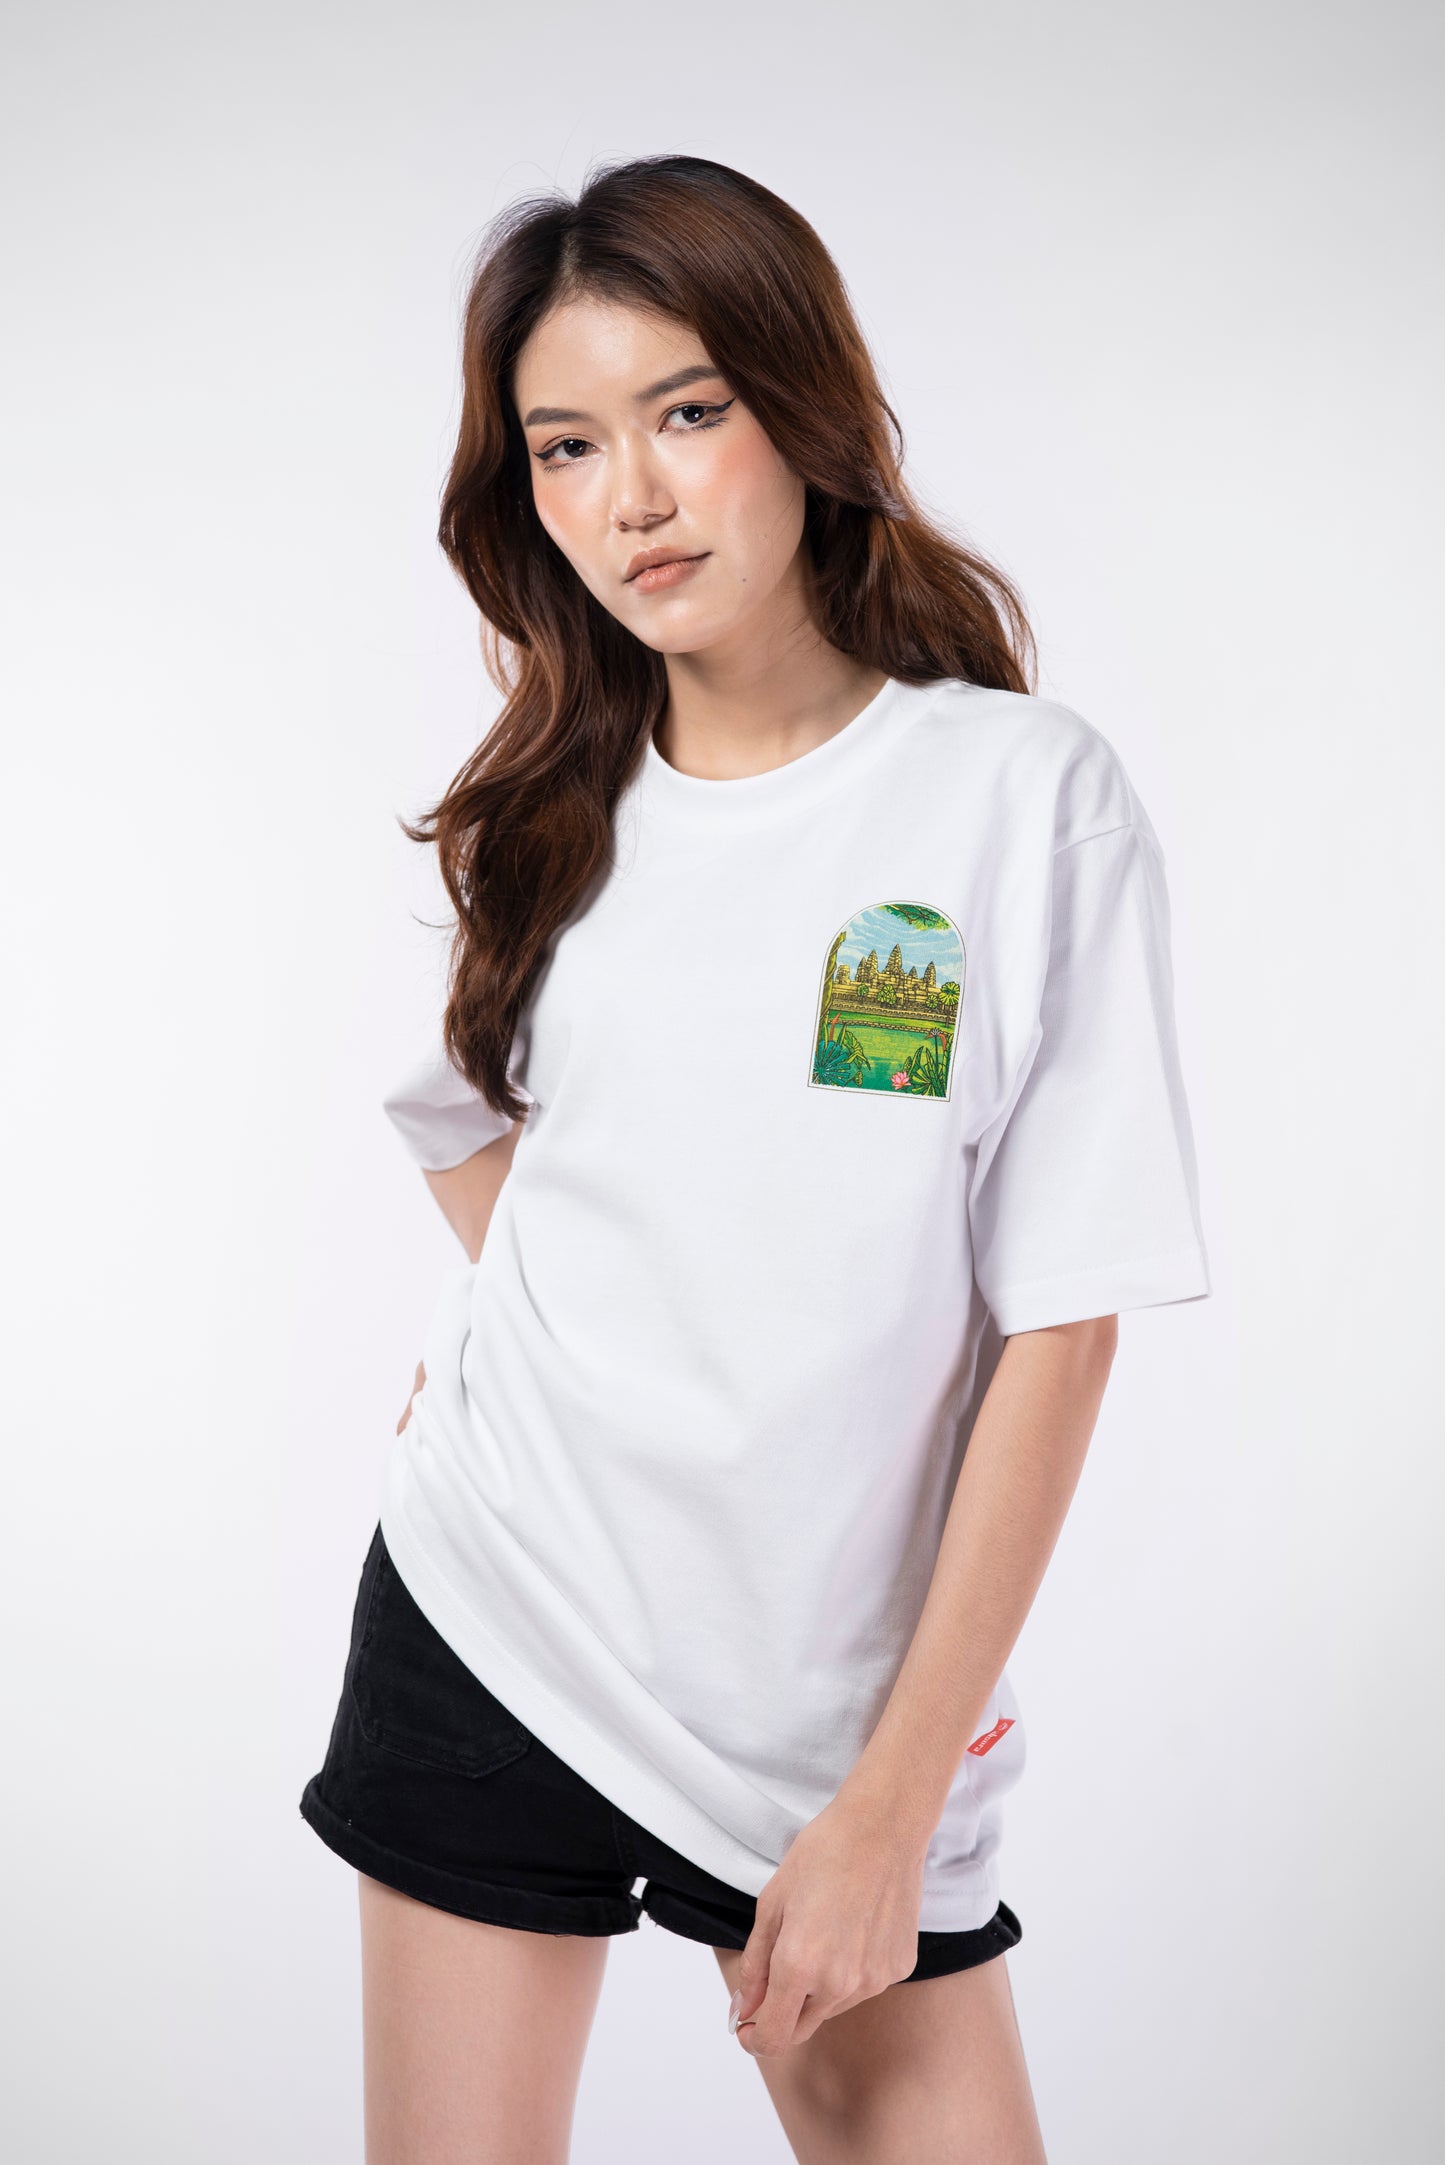 T-shirt Angkor Wat par AHSORA